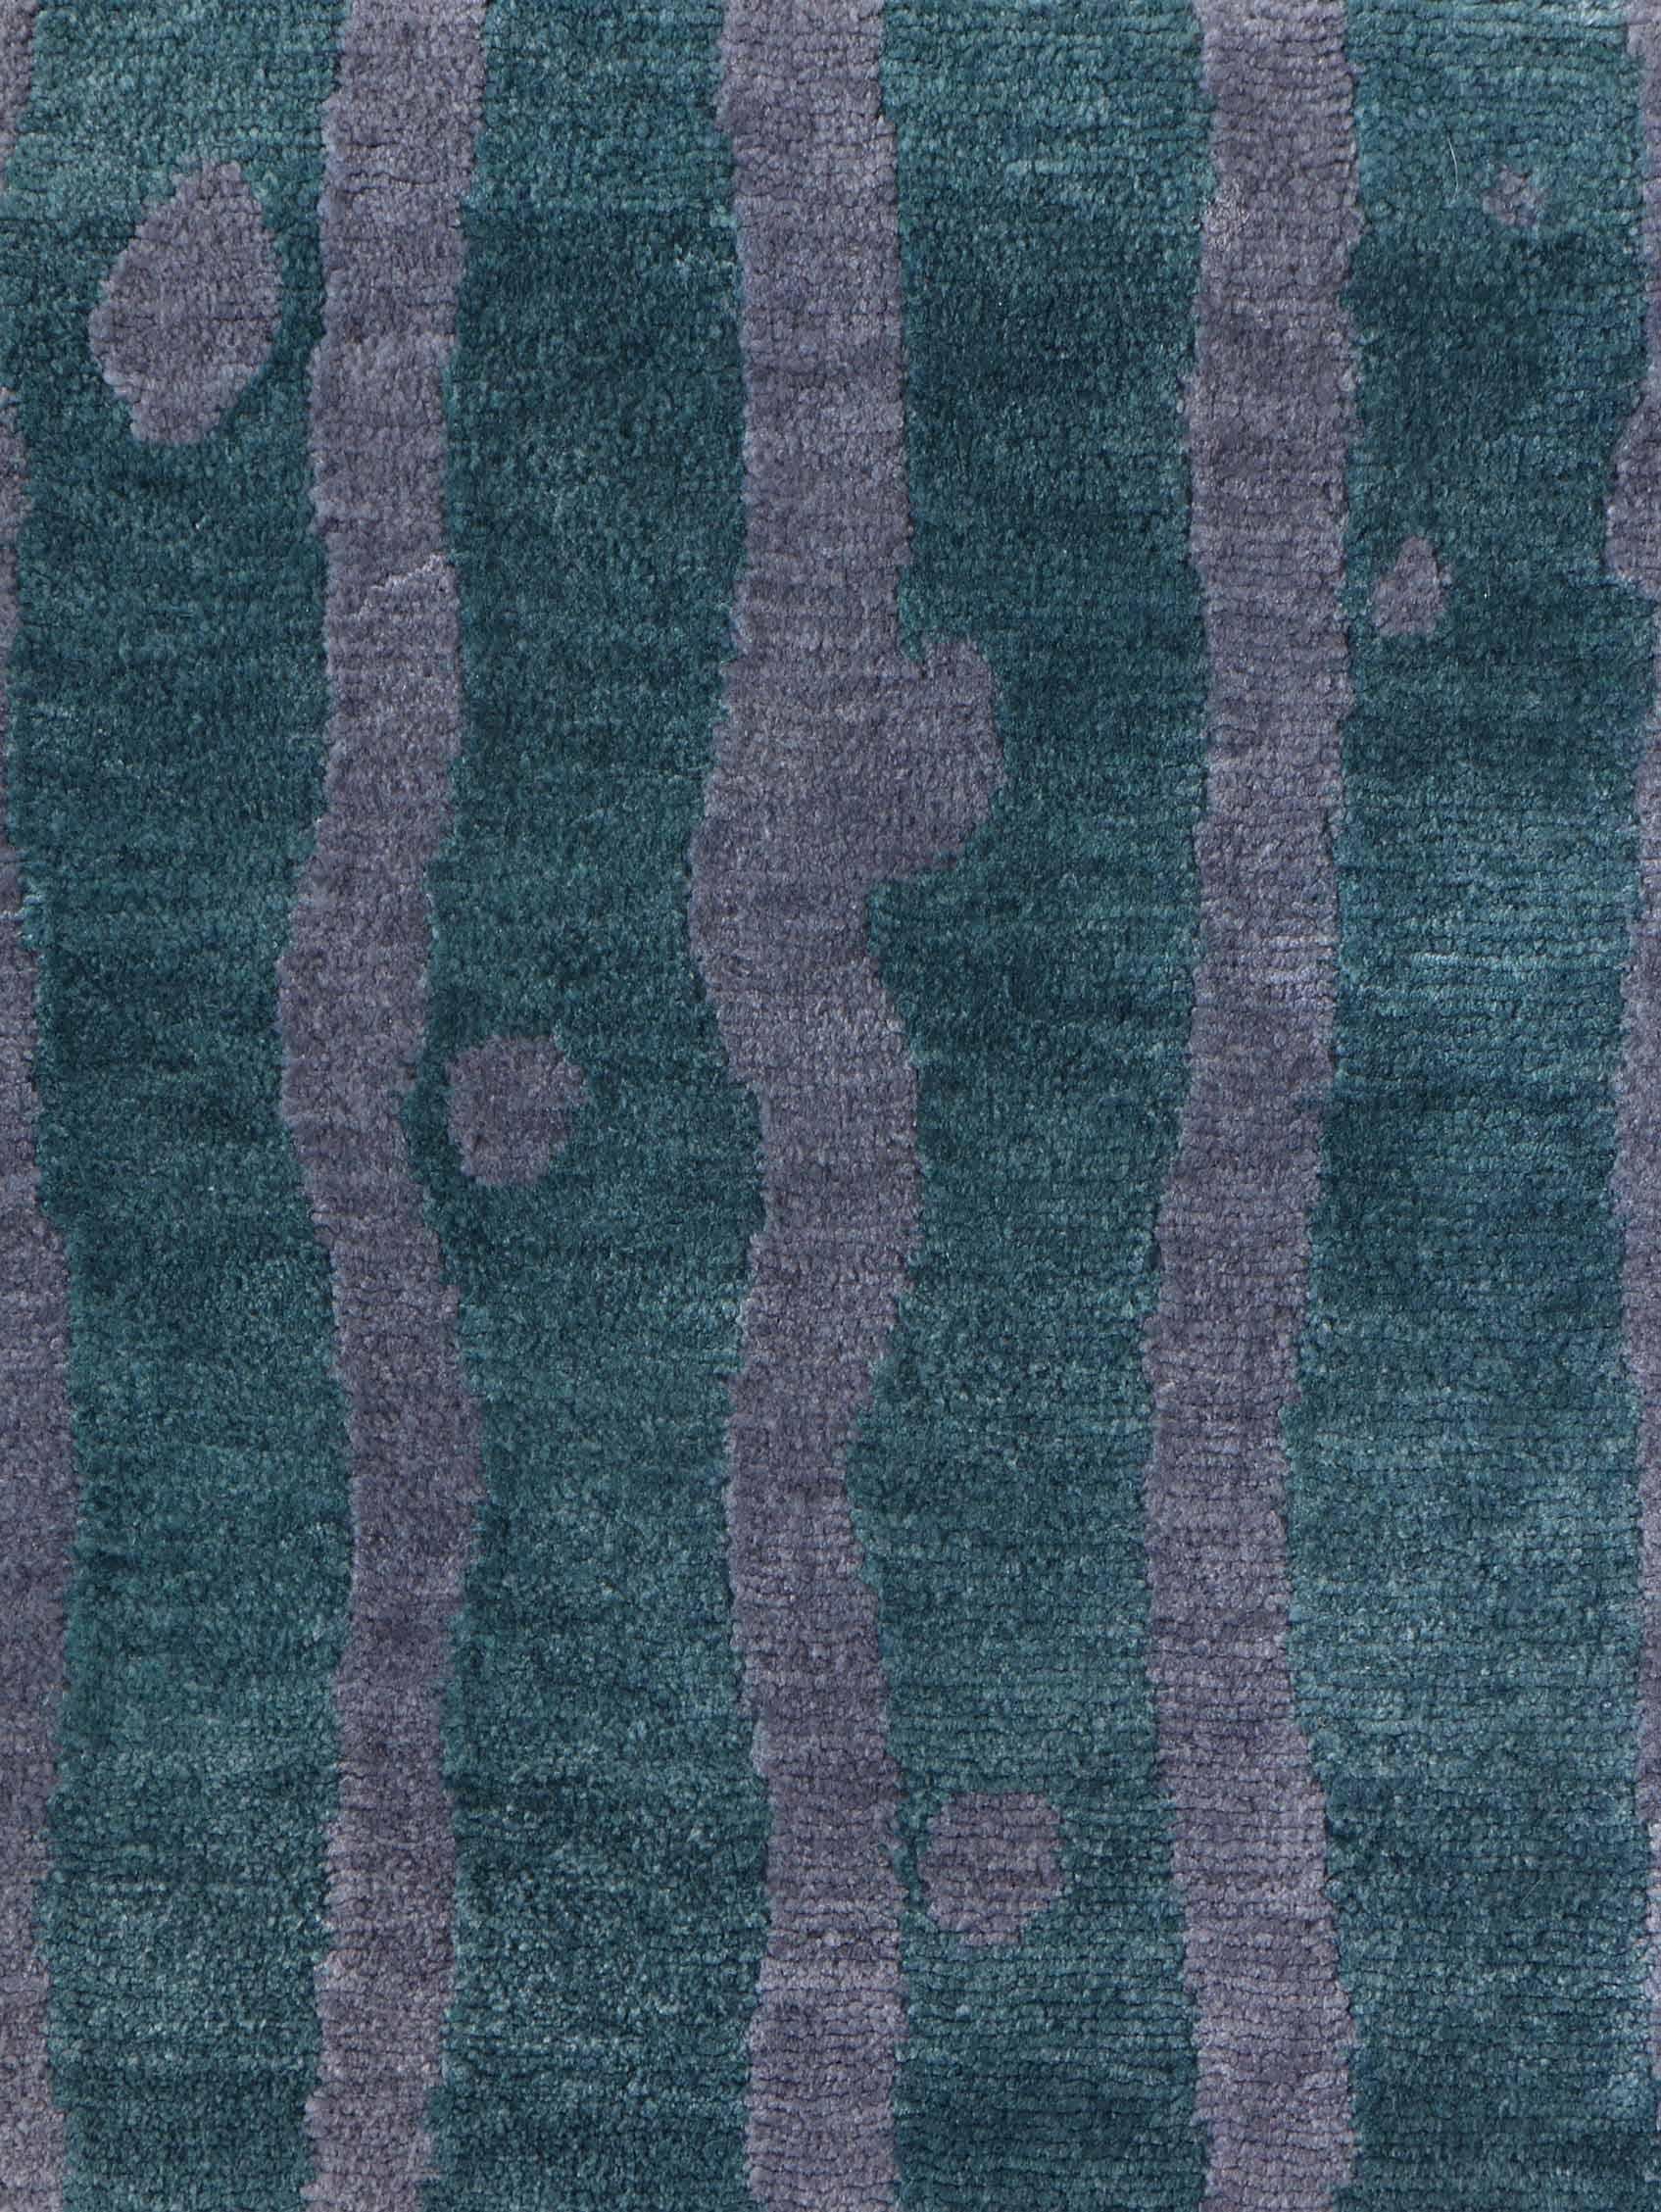 Rug pattern: Drippy Stripe - Gulf
Material: 100% Merino Wool
Quality: Tibetan Cross Weave, handwoven 
Size: 8’-0